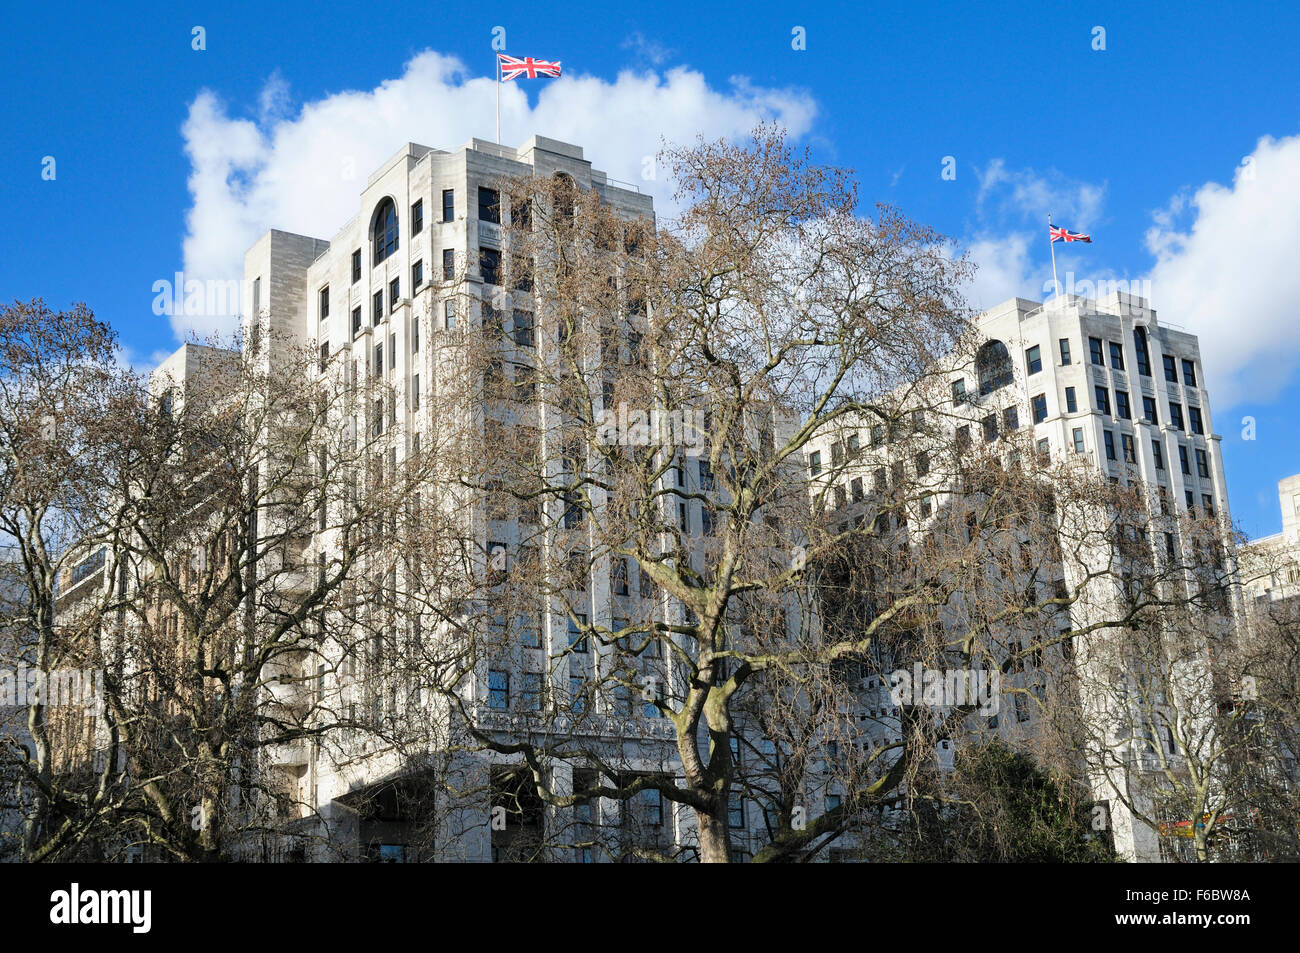 The Adelphi Building seen from Victoria Embankment Gardens, Charing Cross, London, England, UK Stock Photo